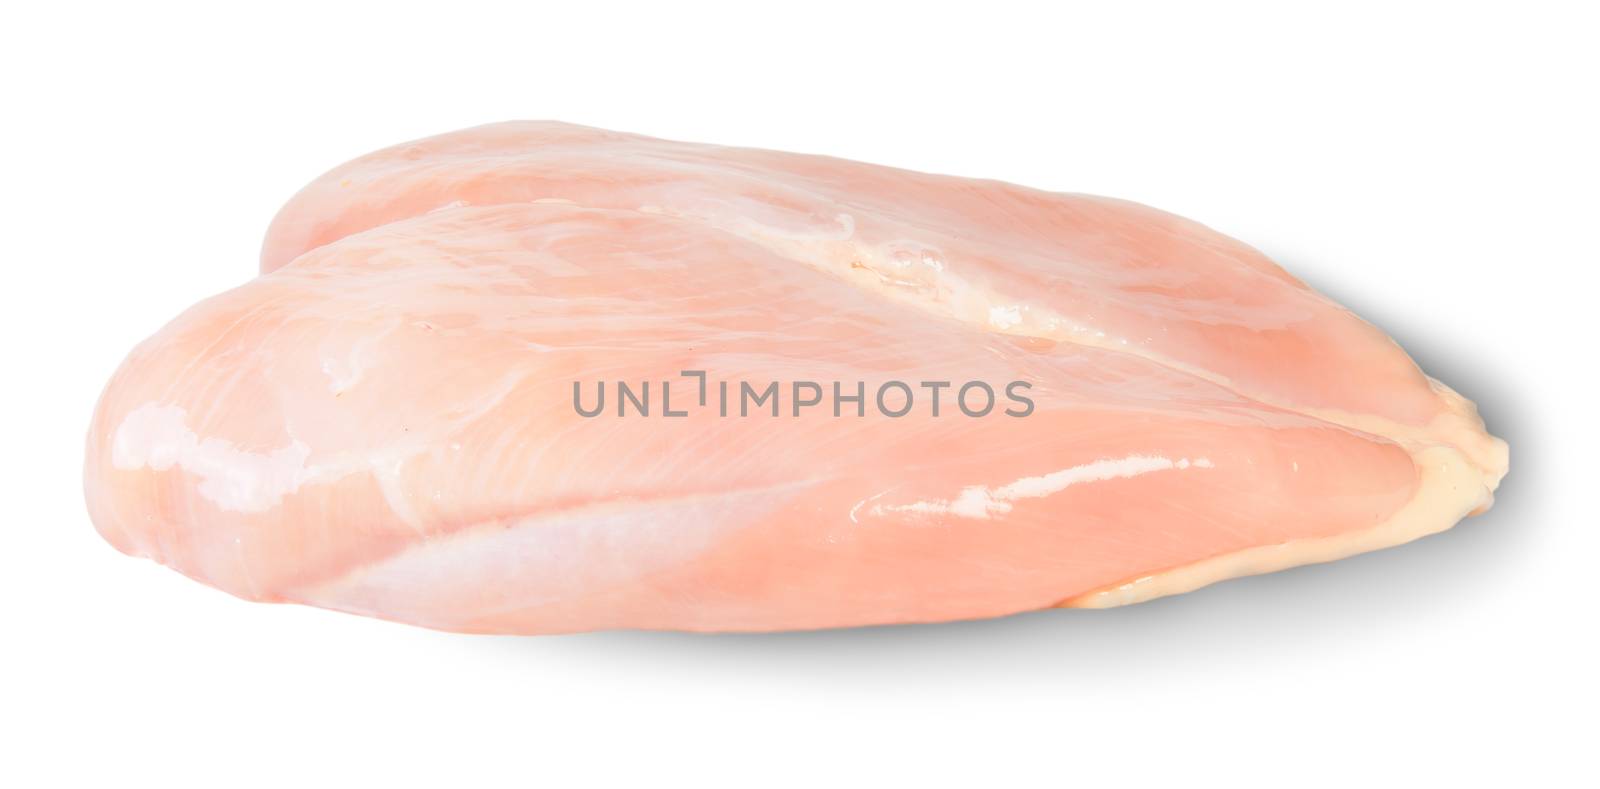 Raw Chicken Breast by Cipariss